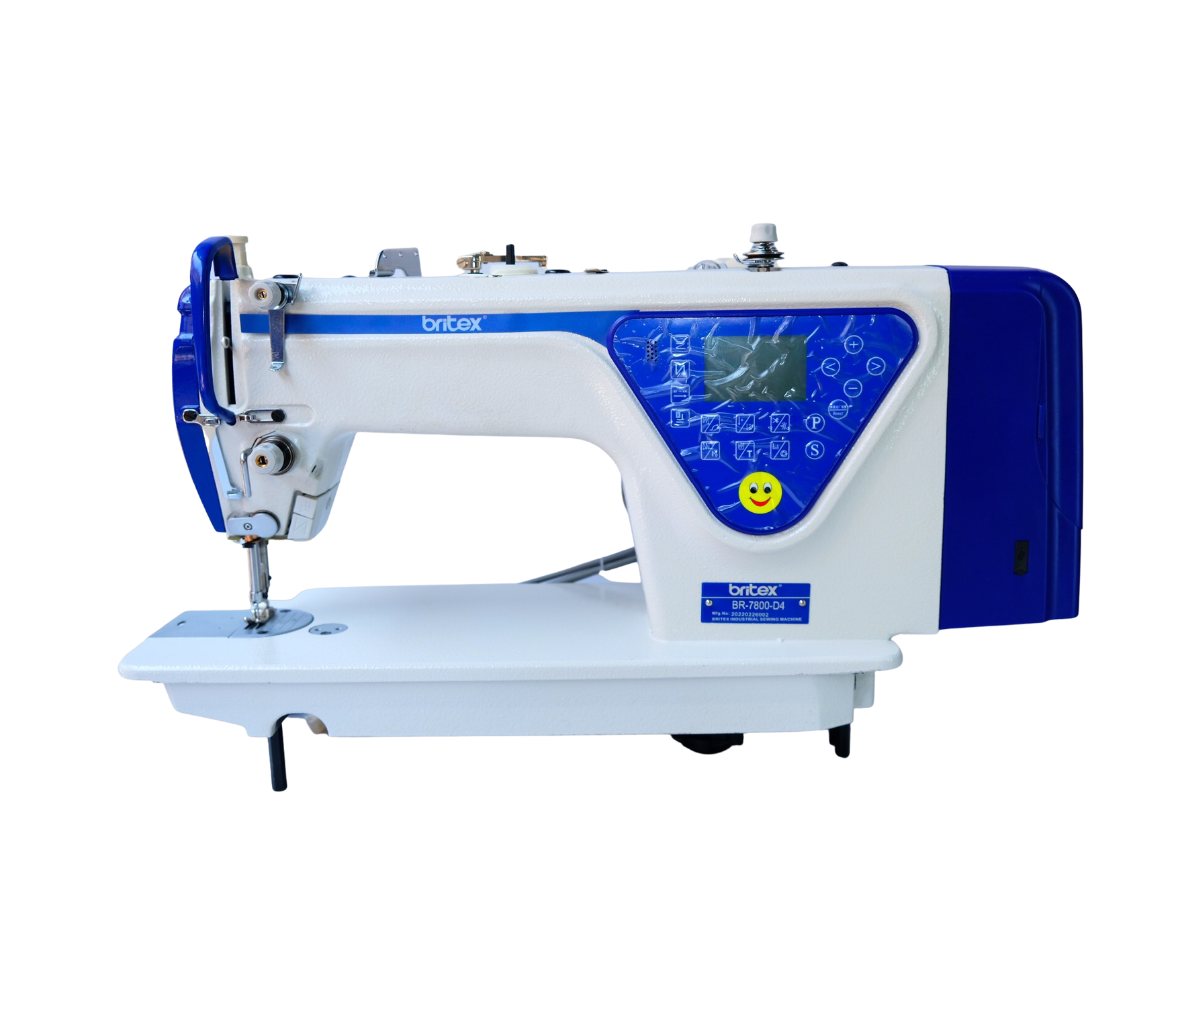 Automatic Direct drive lock stitch sewing machine, Touch Screen Panel - Brand: Britex, Model: BR-7300-D4. - copy